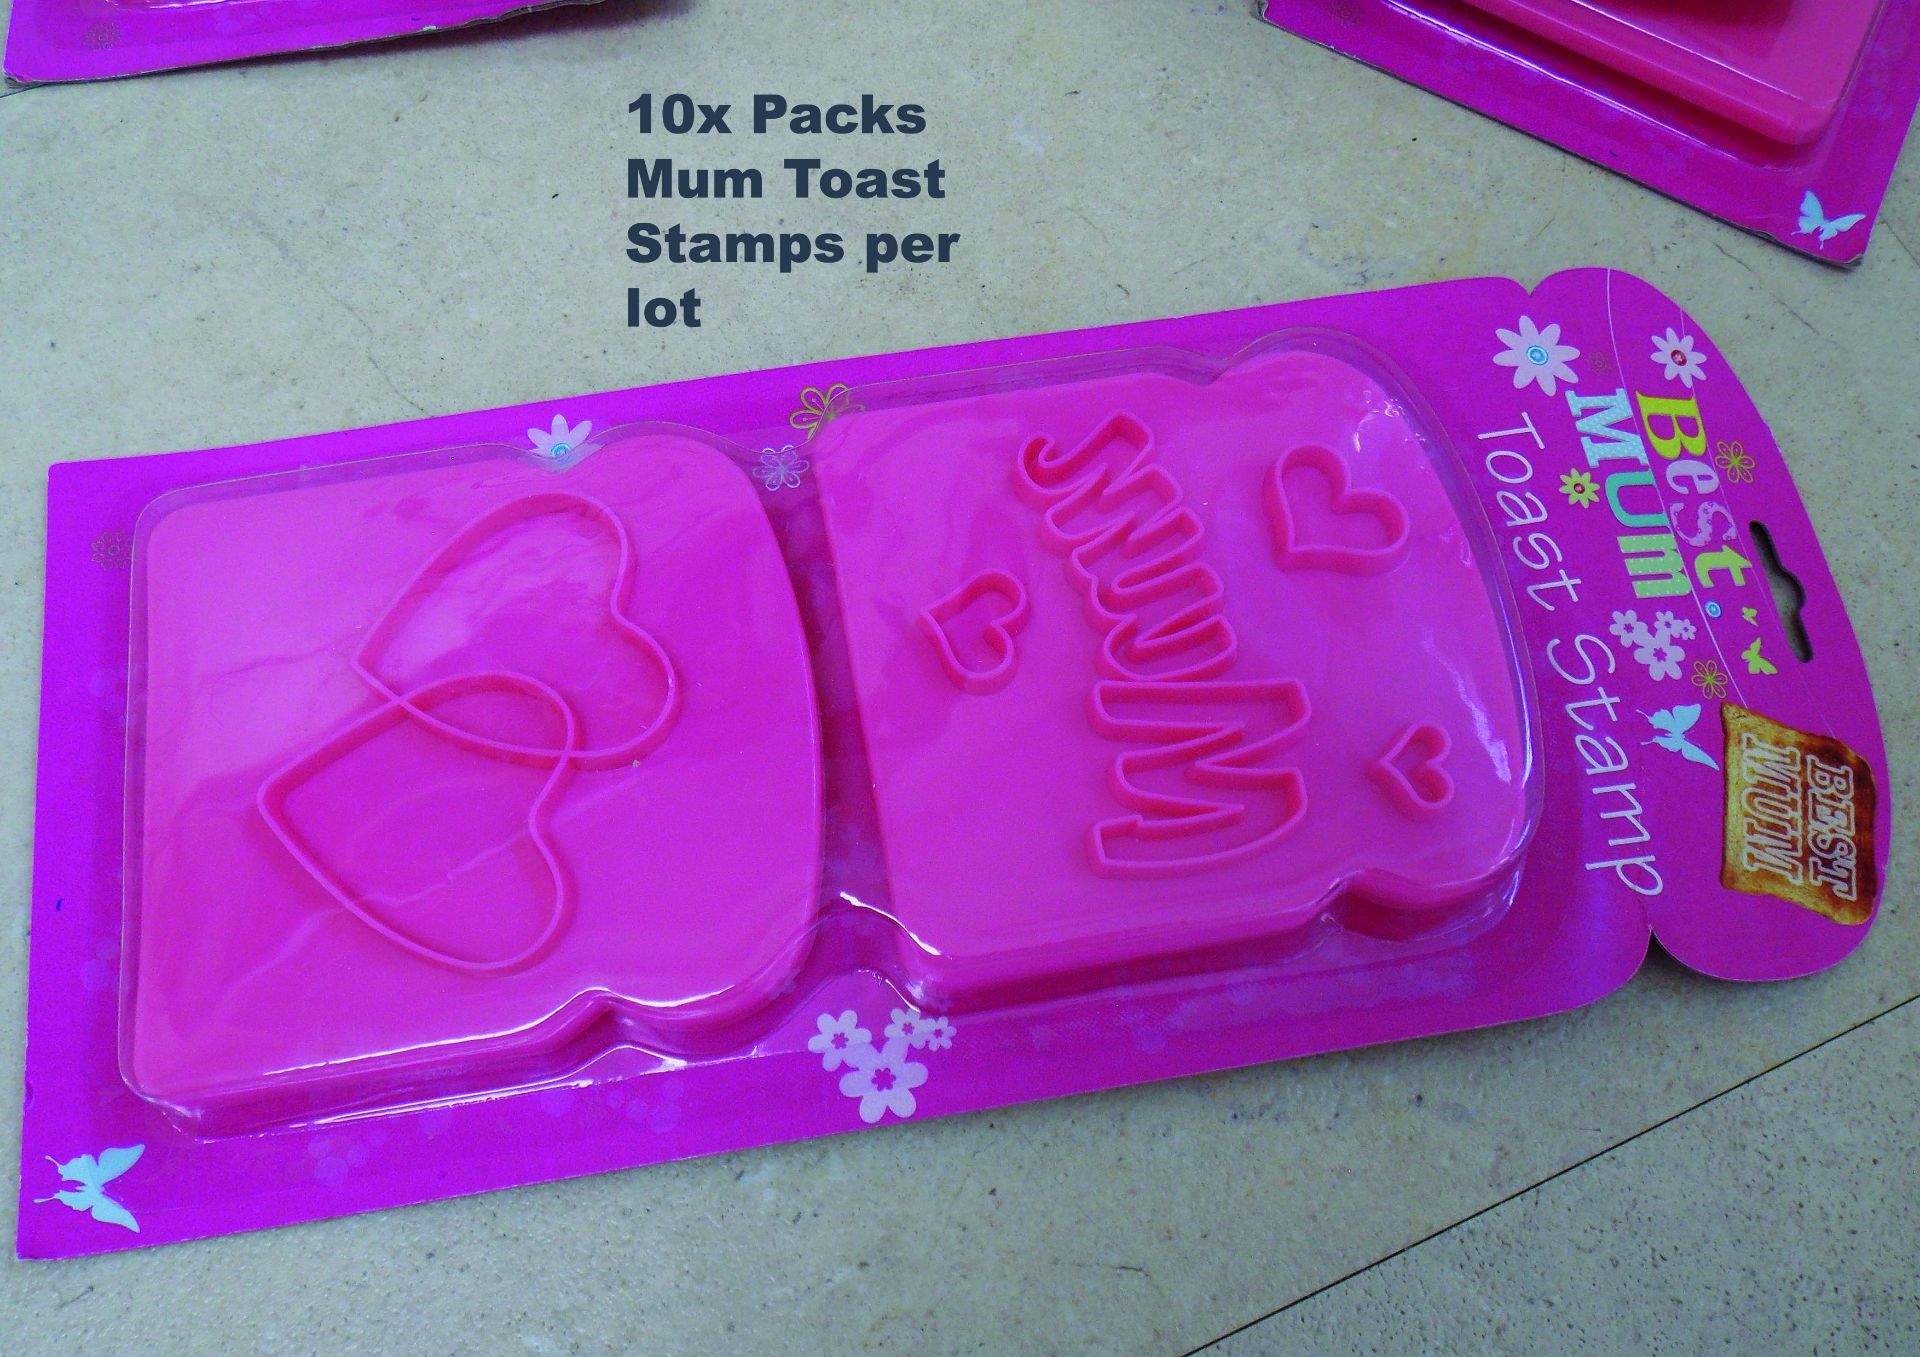 10x "Mum" Toast Stamp Sets - Image 4 of 5